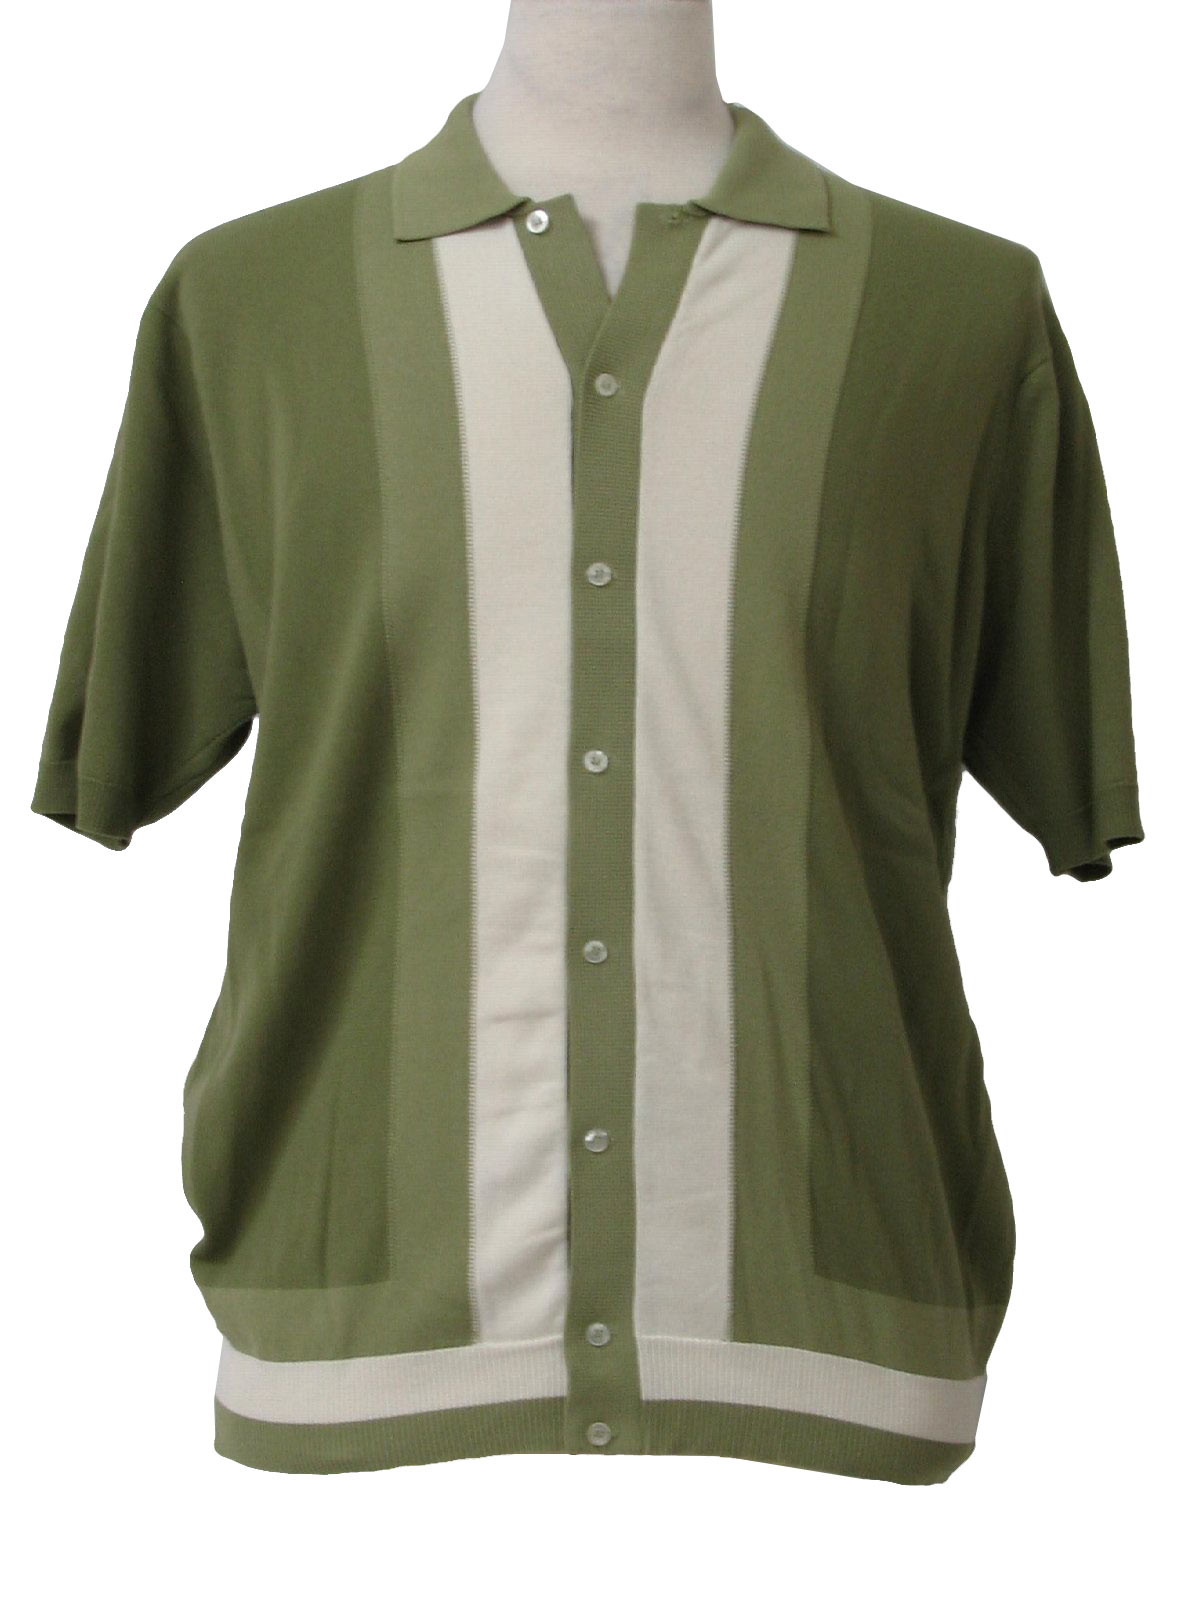 1950's Retro Knit Shirt: Late50s -No Label- Mens white, sea green ...